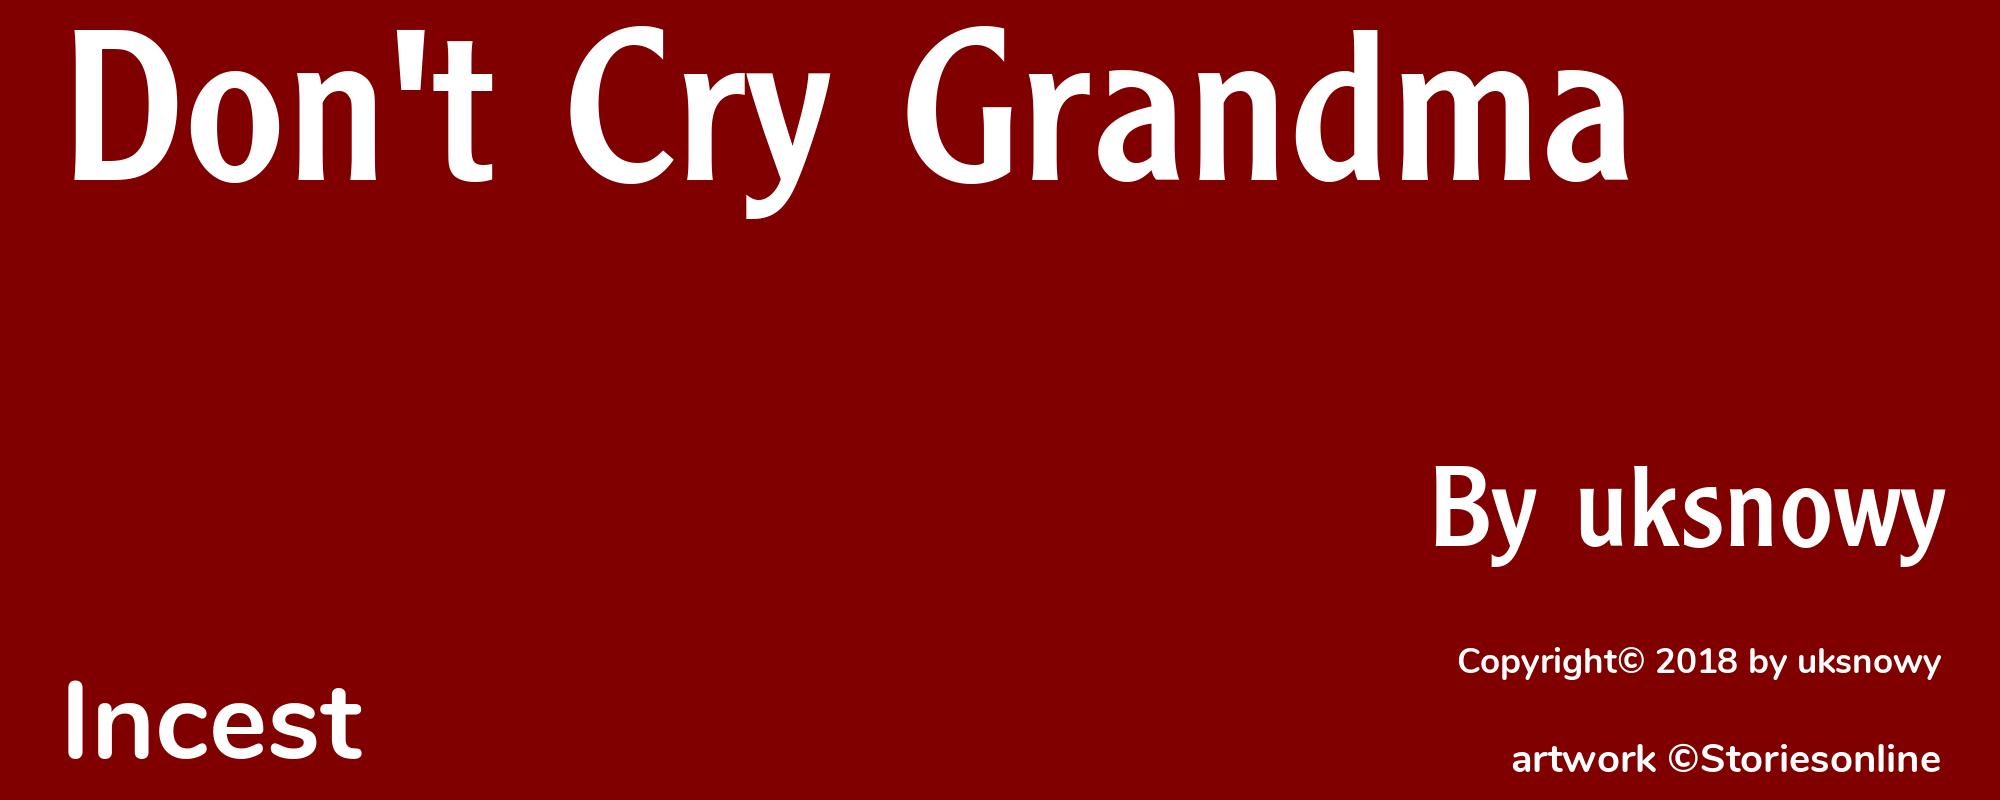 Don't Cry Grandma - Cover